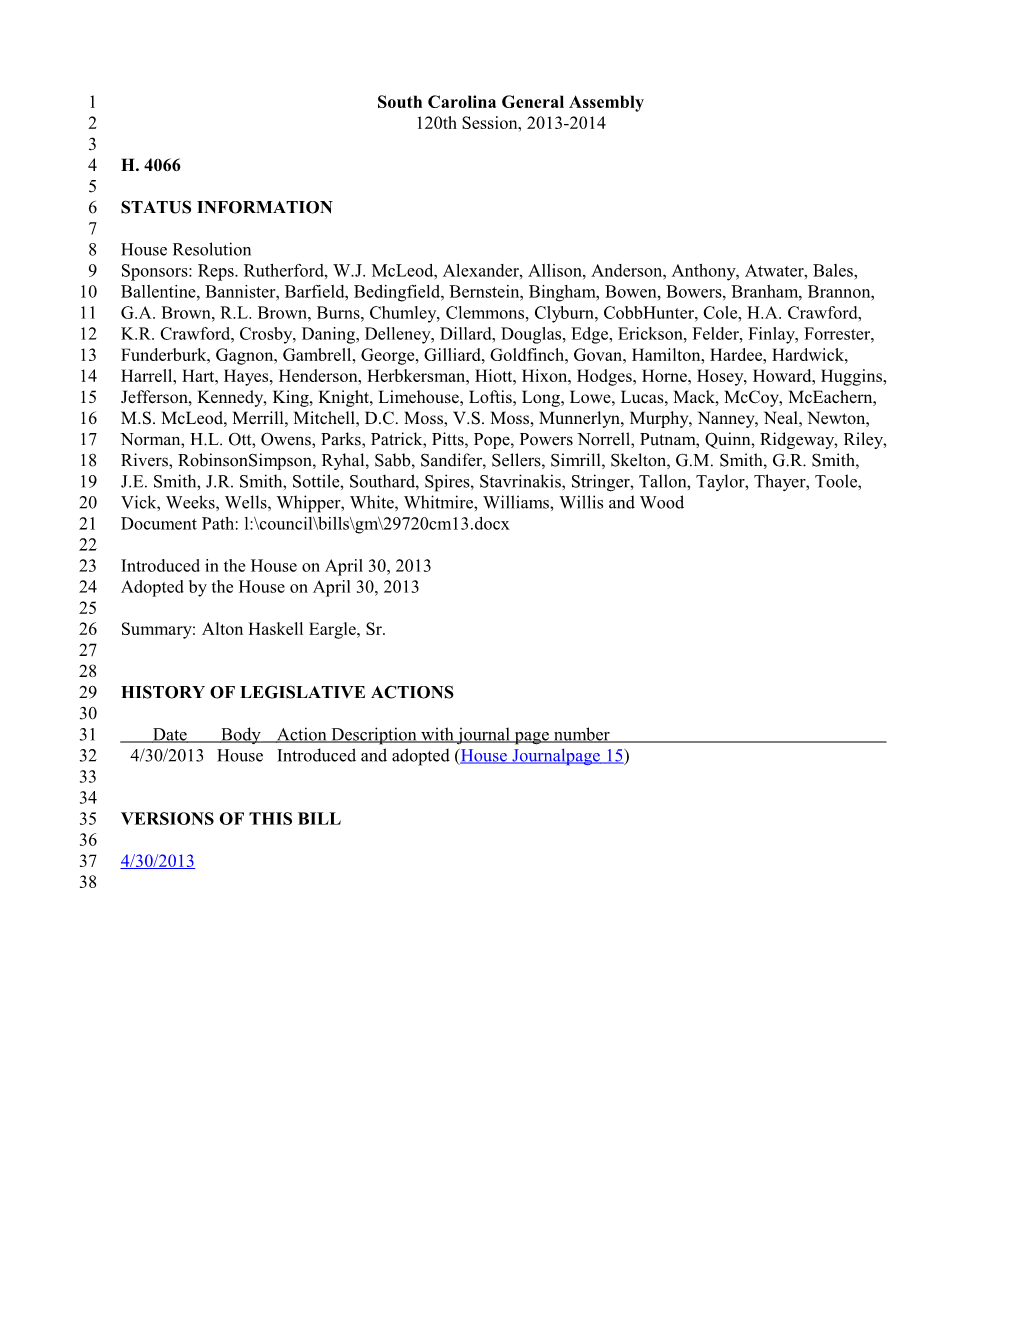 2013-2014 Bill 4066: Alton Haskell Eargle, Sr. - South Carolina Legislature Online